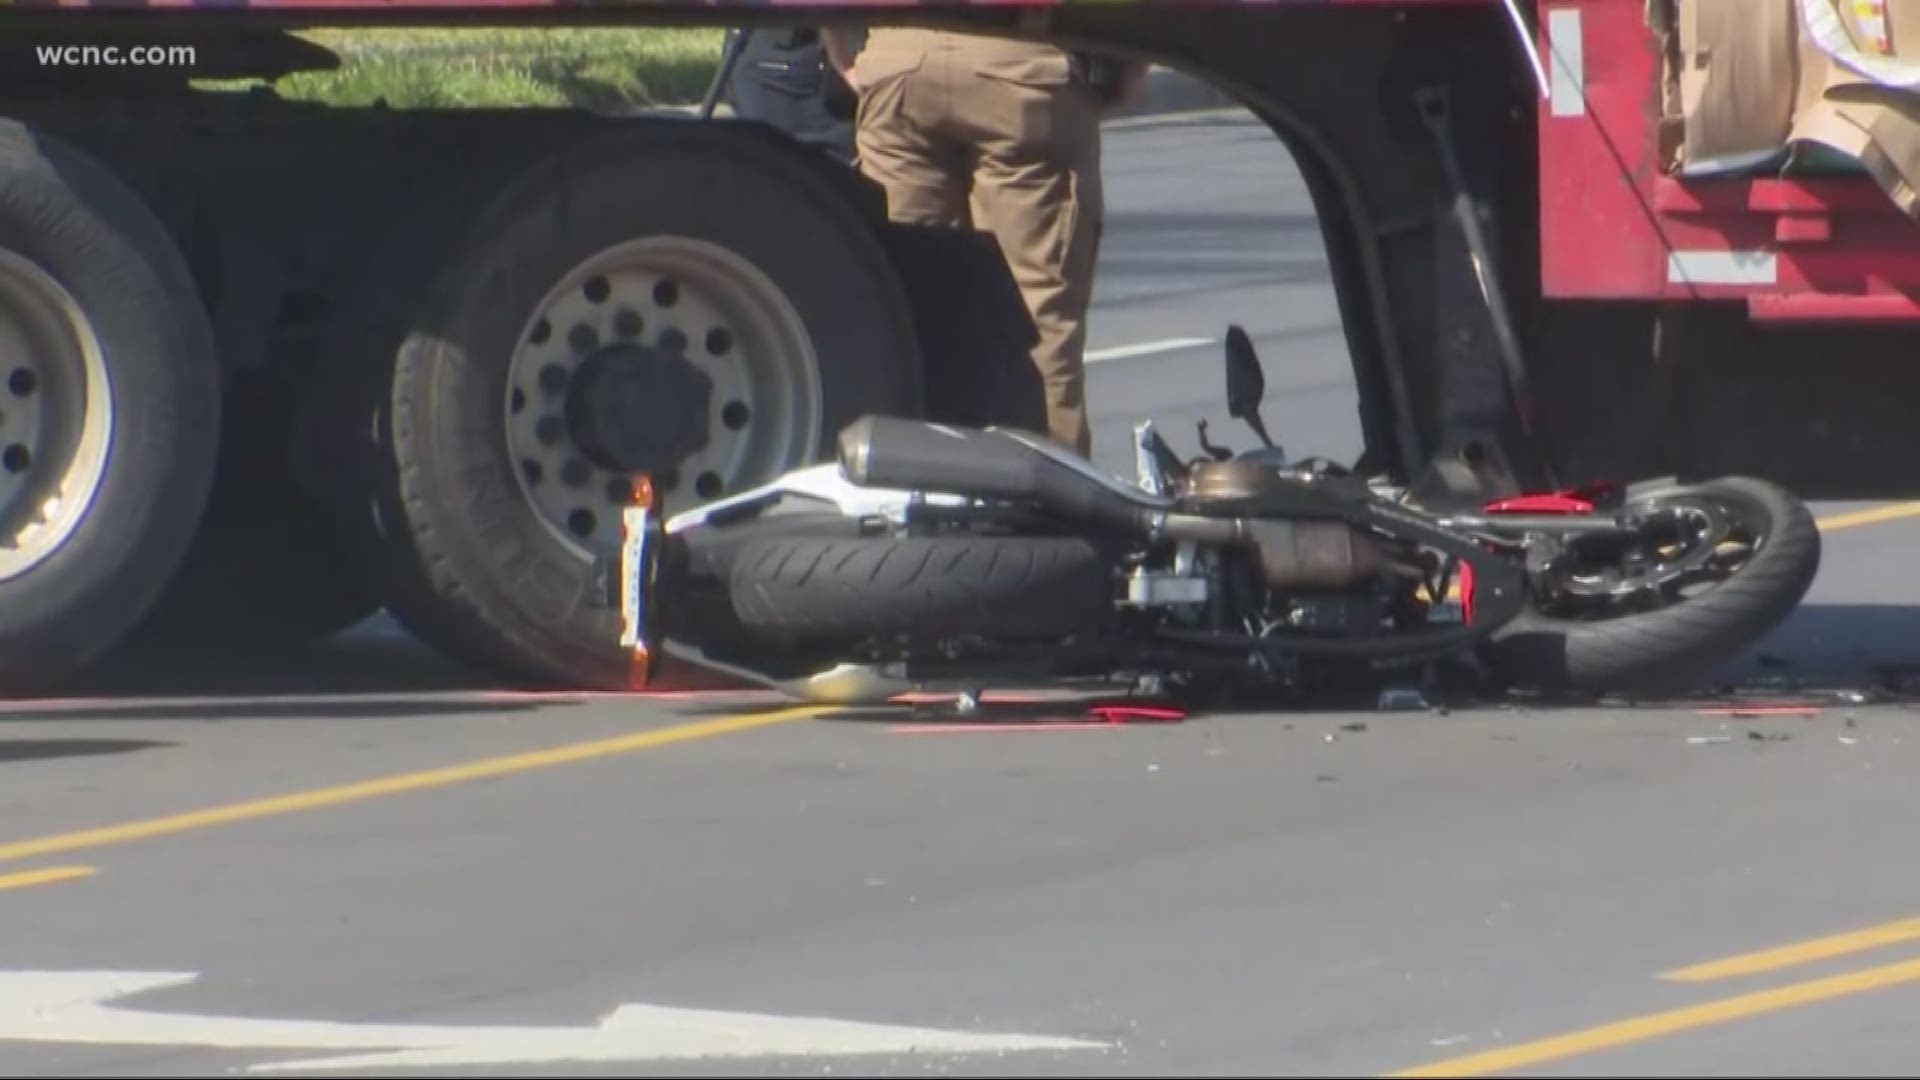 Motorcyclist killed in wreck involving tractortrailer in Gastonia